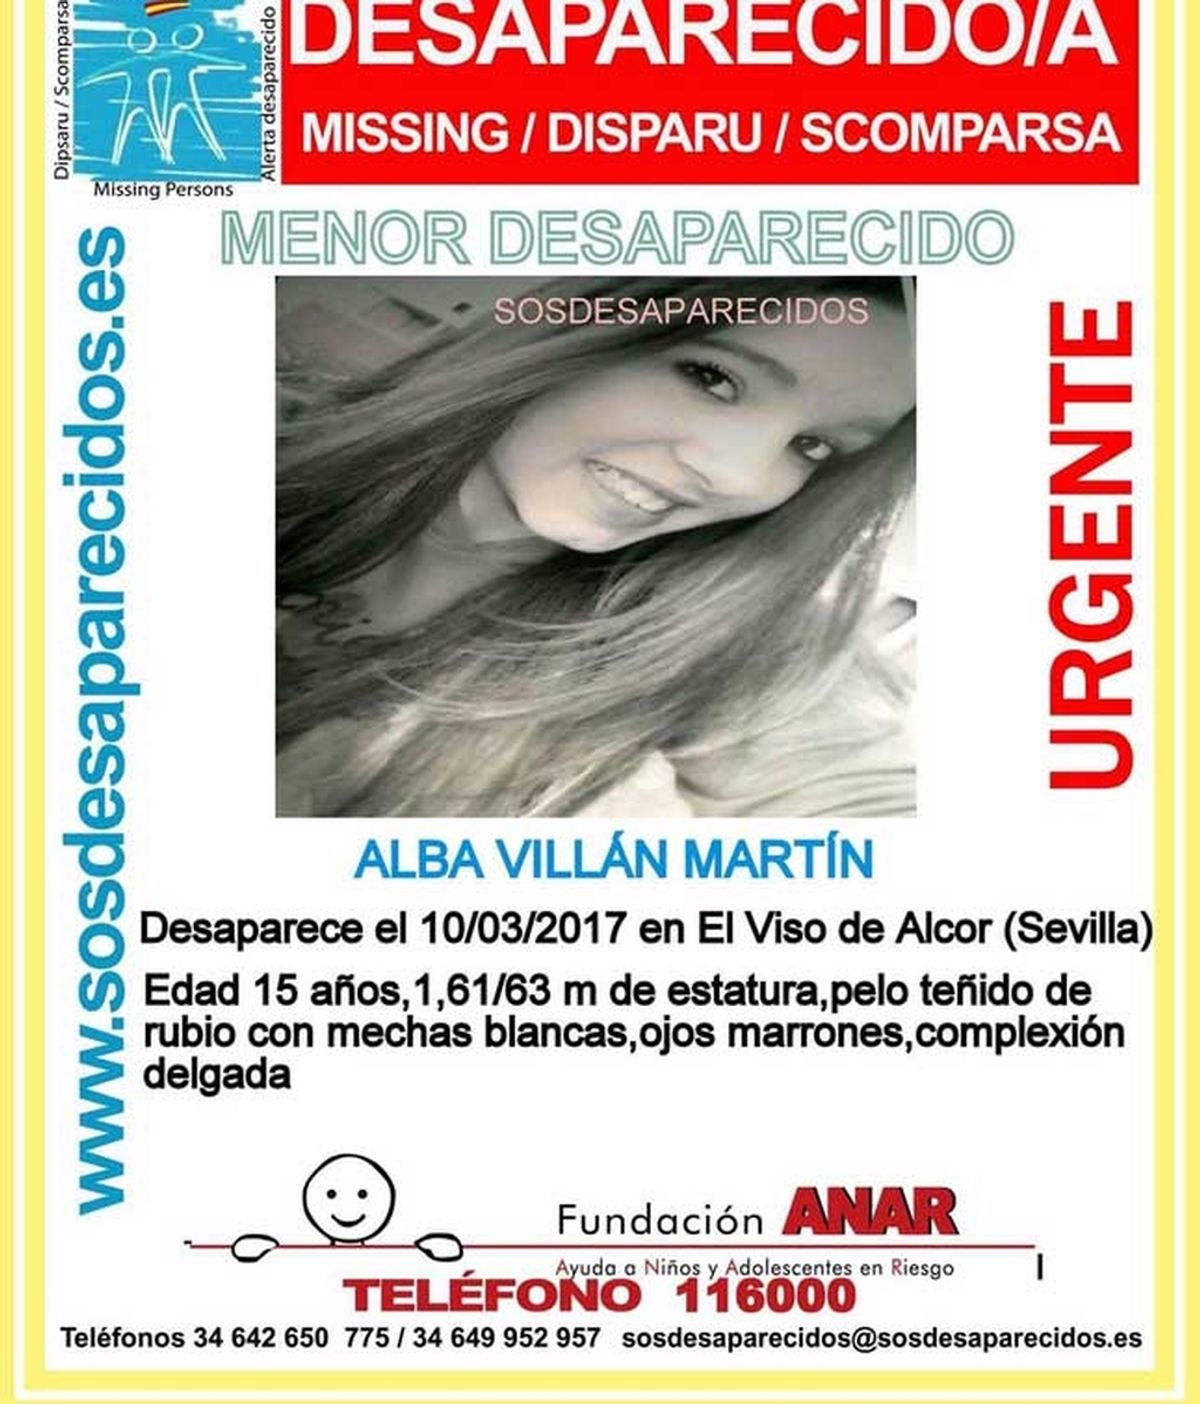 Alba Villán Martín, desaparecida